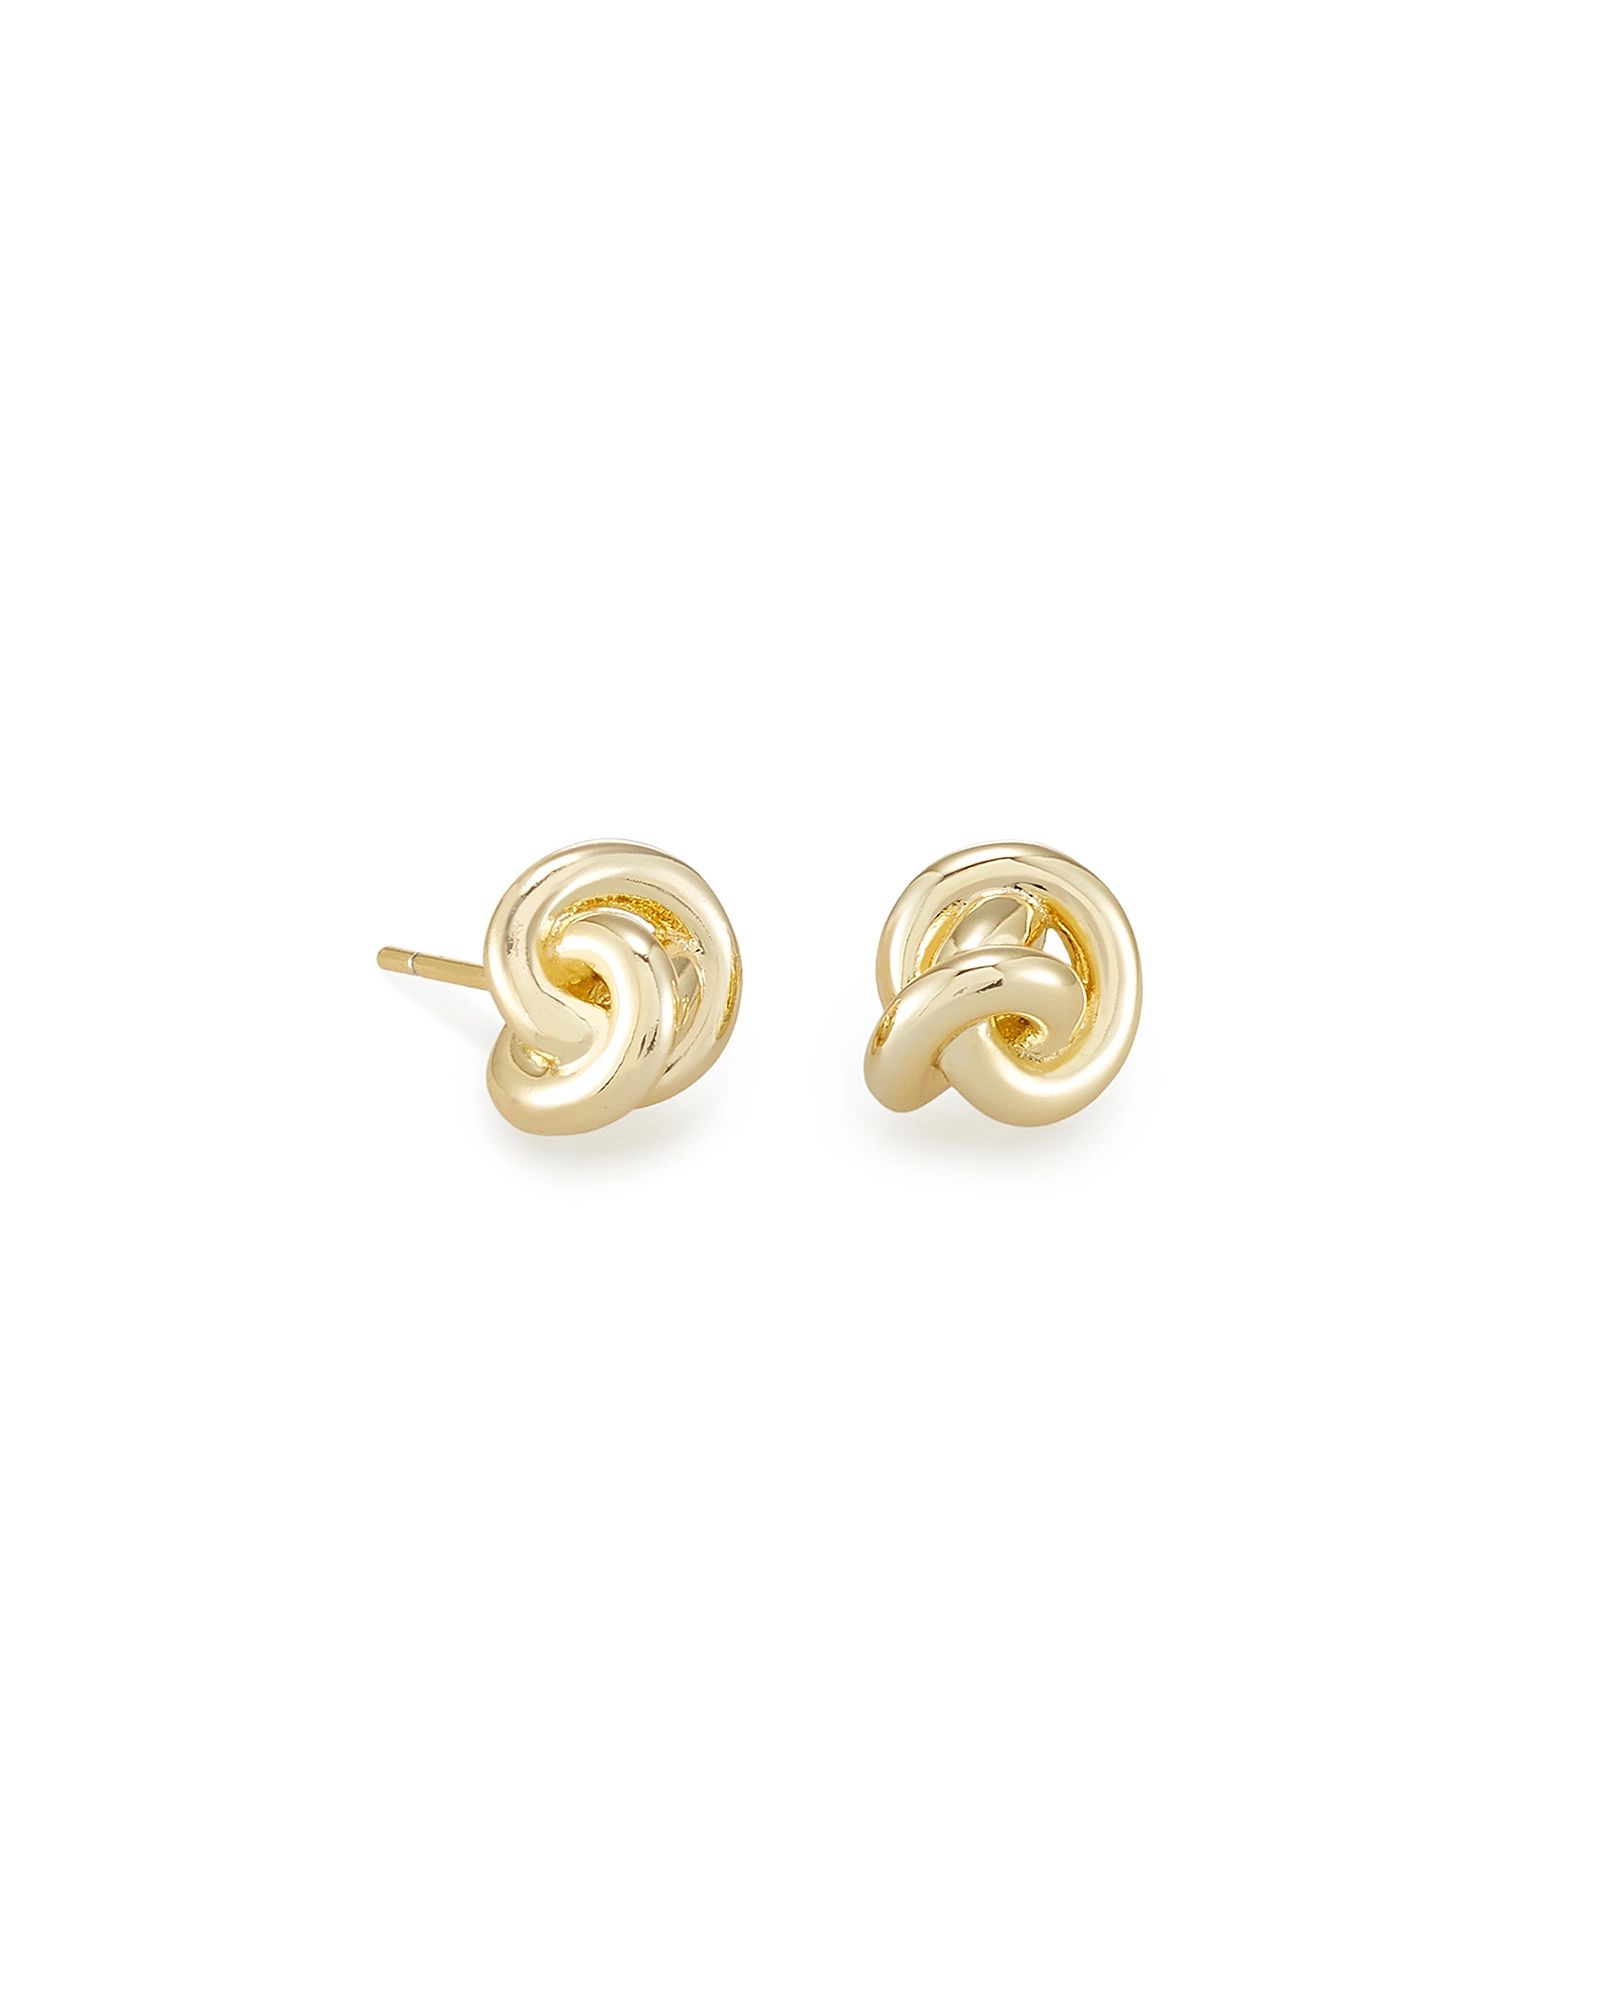 Presleigh Love Knot Stud Earrings in Rose Gold | Kendra Scott